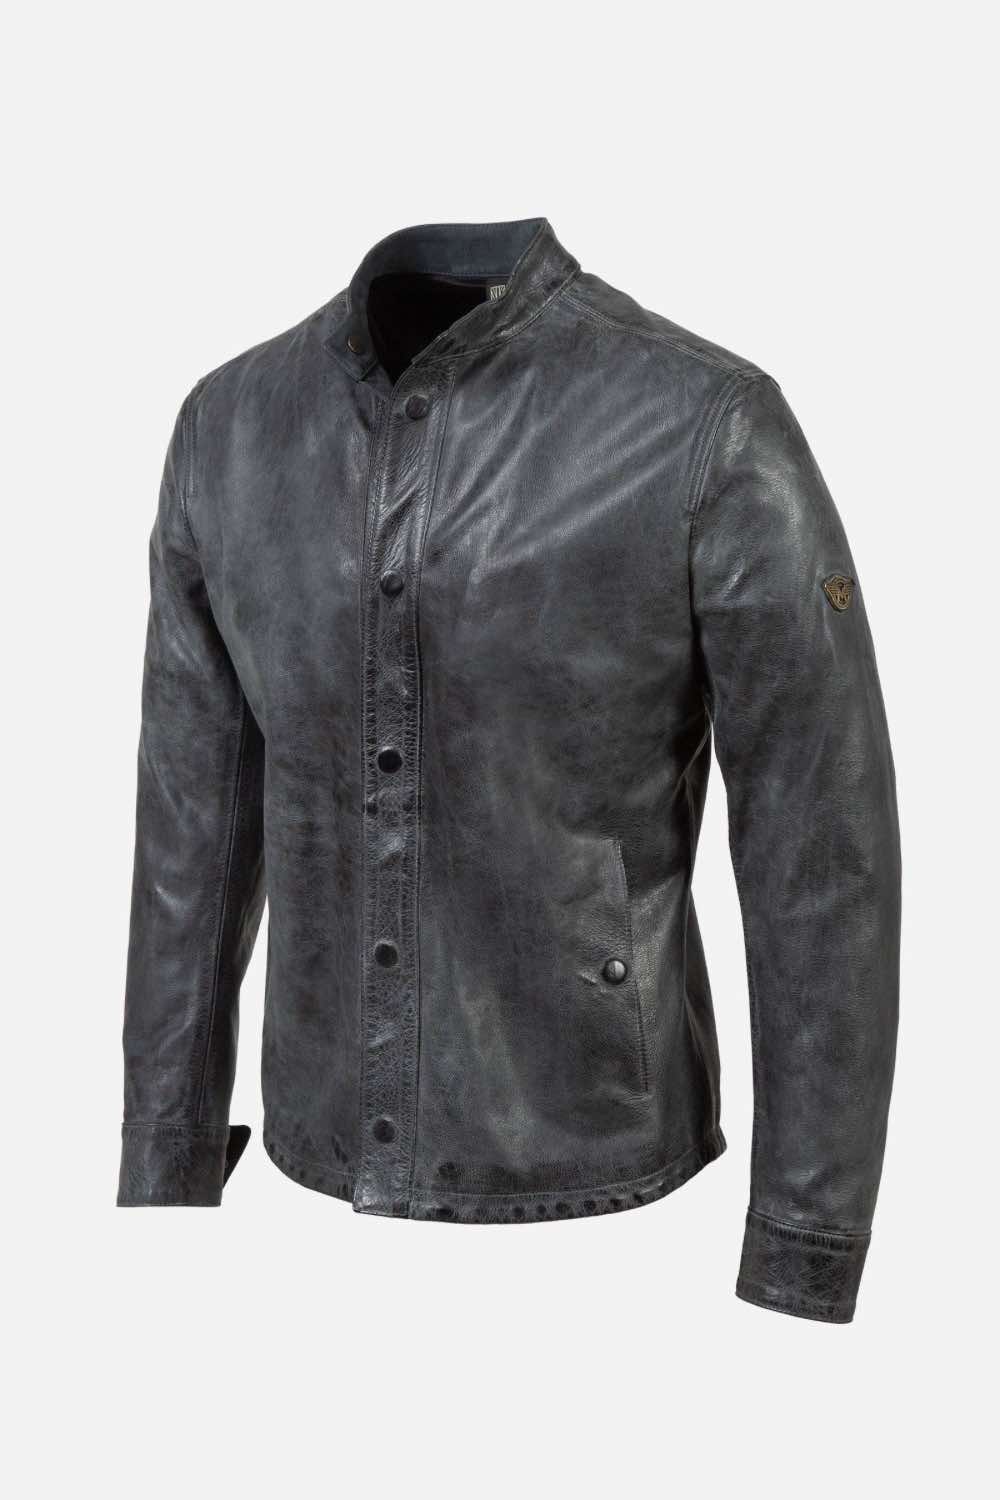 Matchless Shoreditch Shirt Men's Leather Jacket Antique Black - Side View